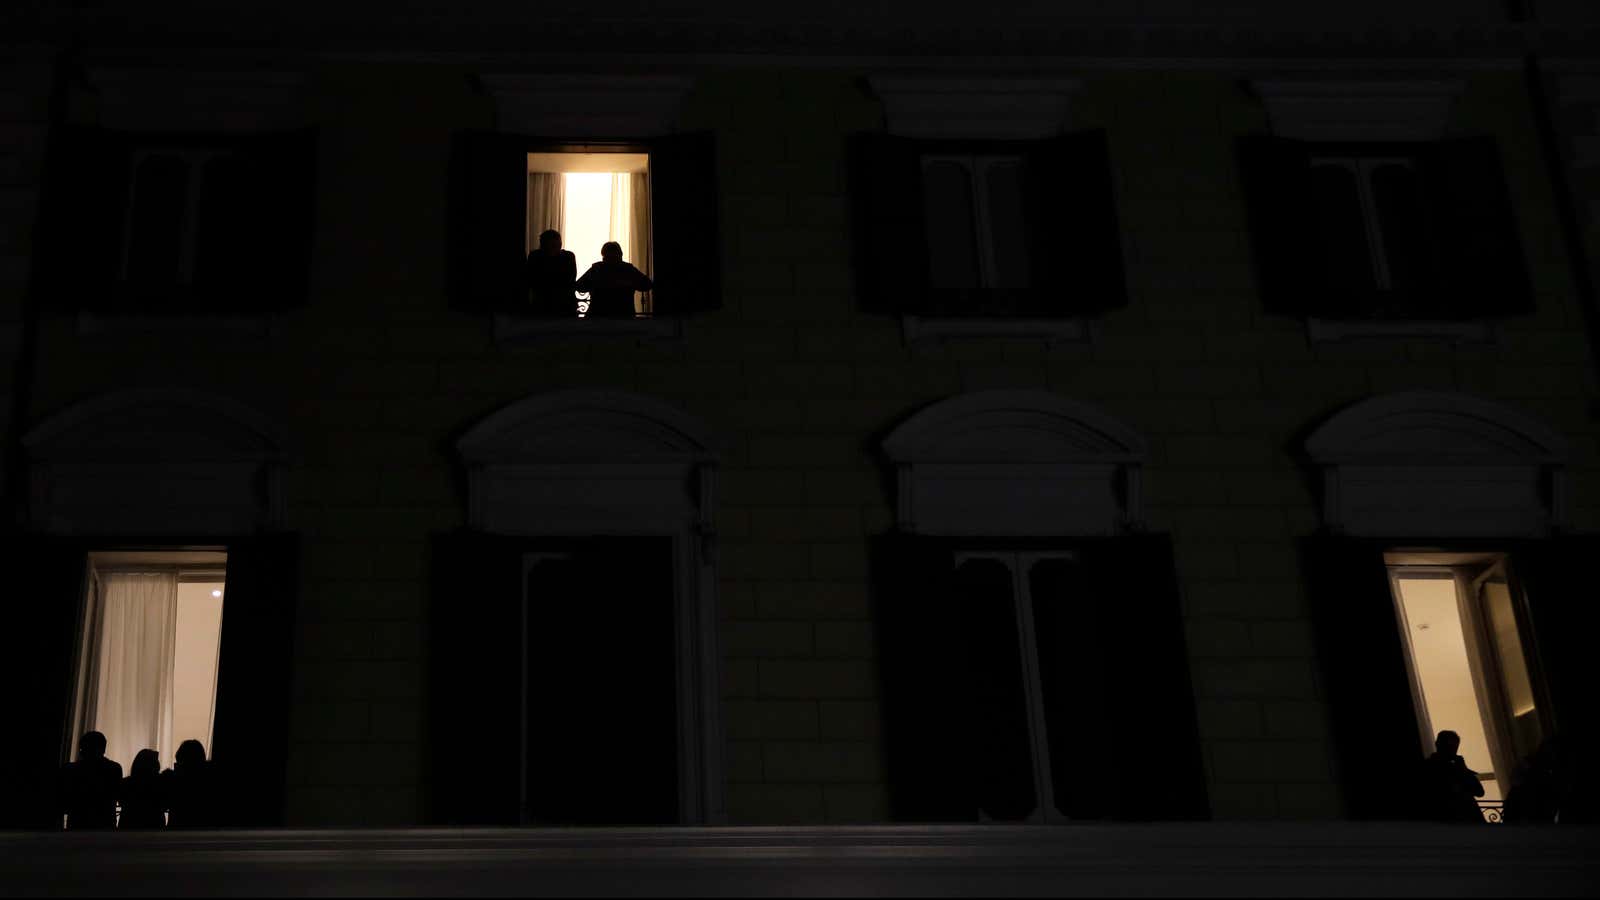 People peer out windows in Rome.